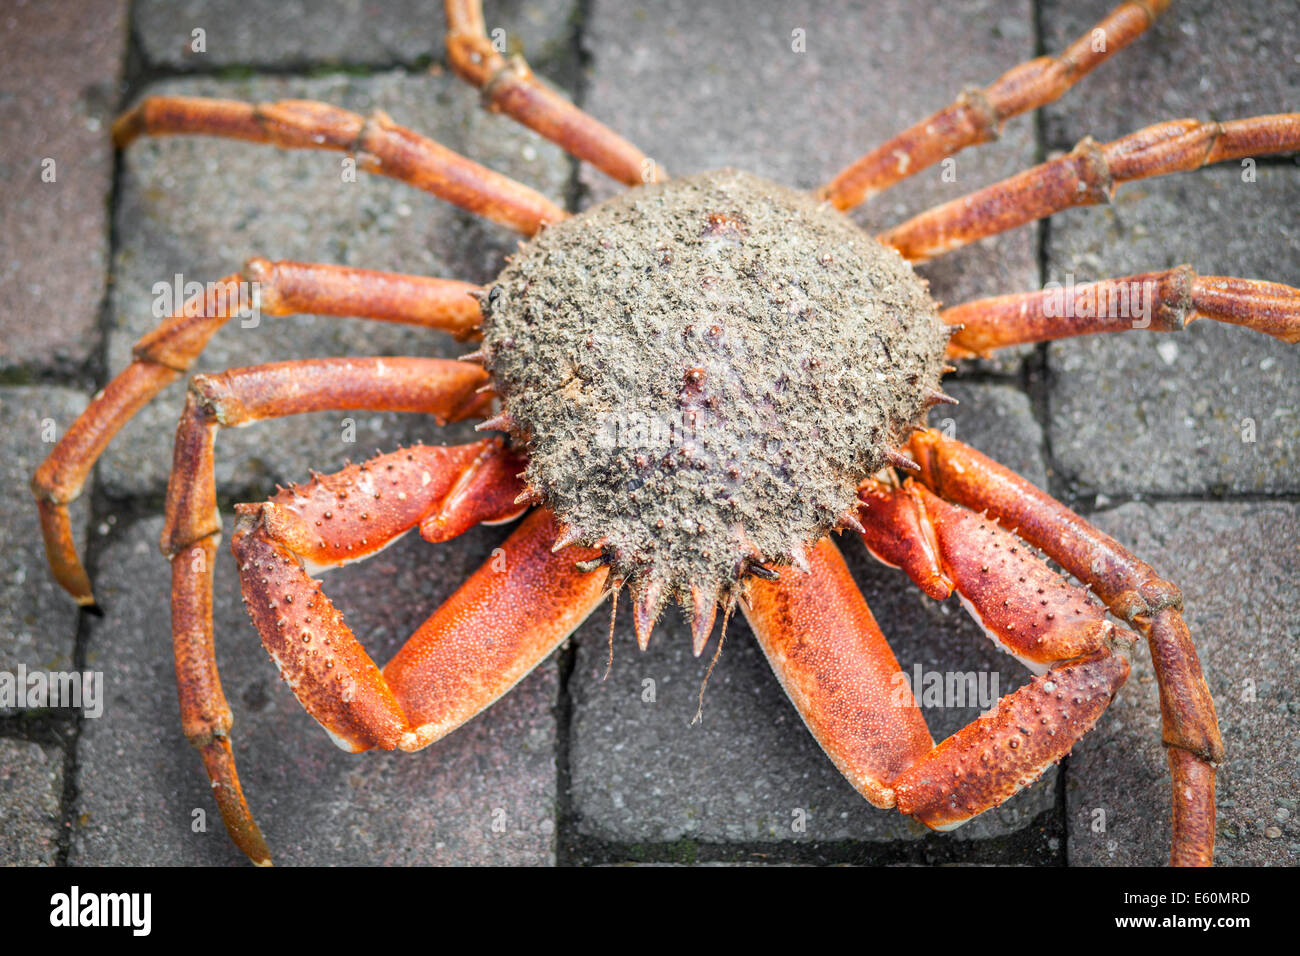 Freshly caught crab Stock Photo